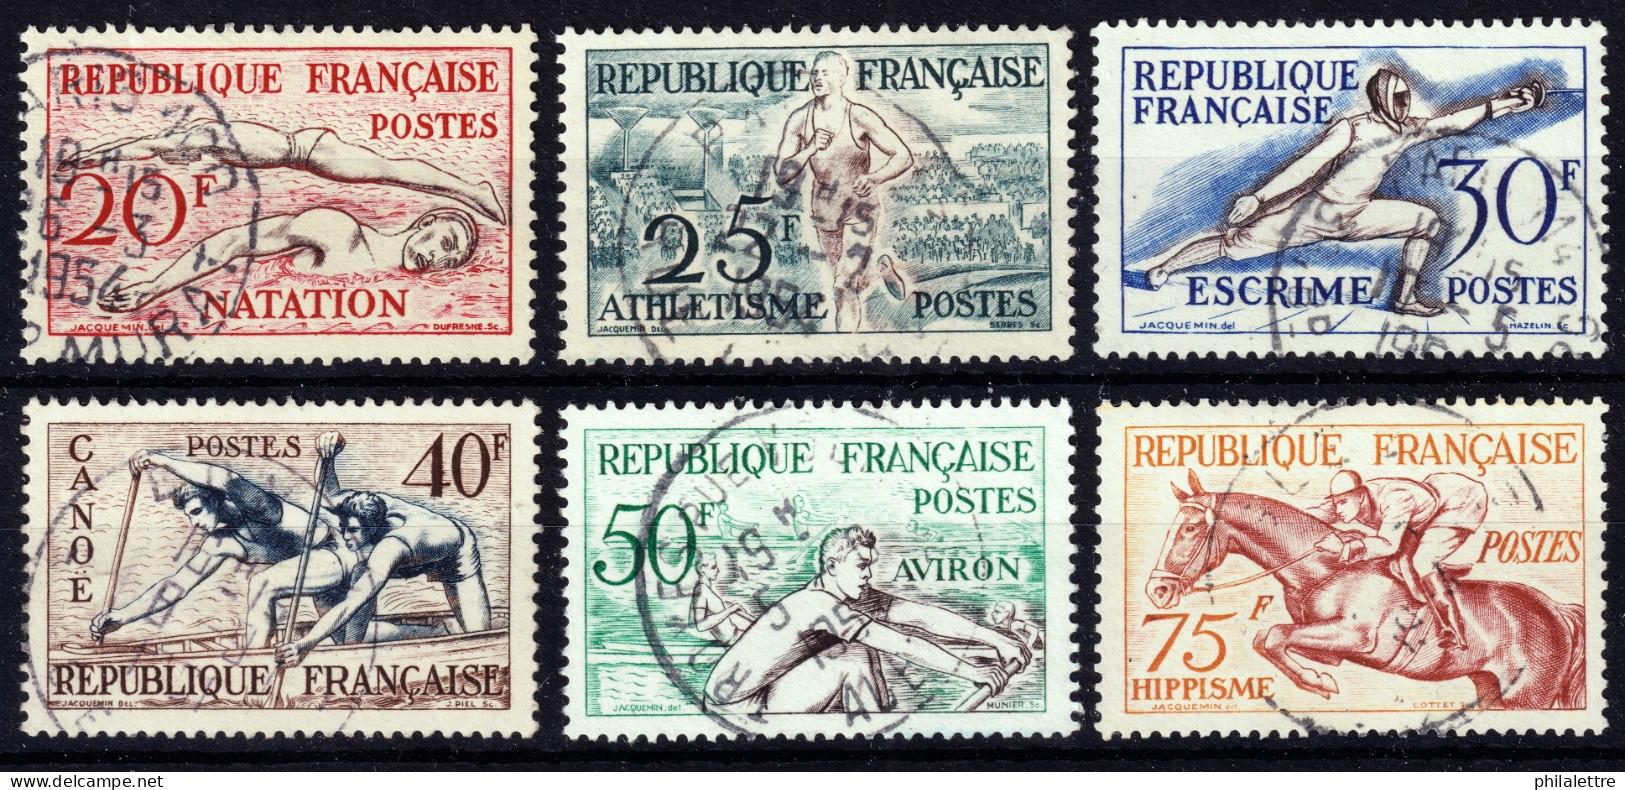 FRANCE - 1953 Yv.960/5 Jeux Olympiques D'Helsinki - Oblitérés TB - Used Stamps